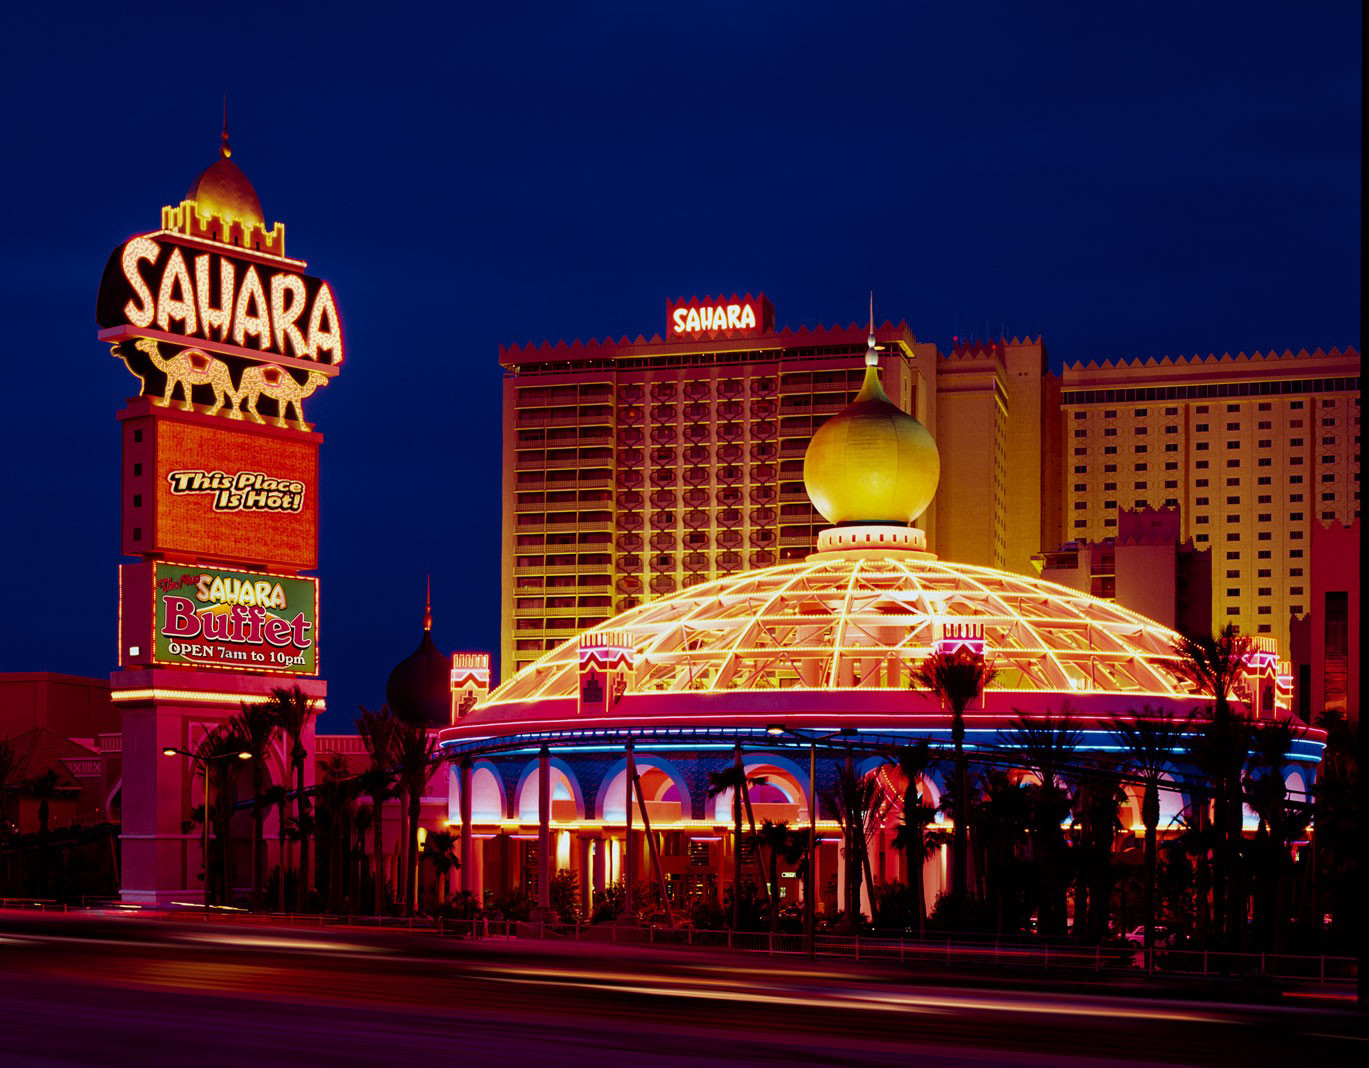 The Sahara Casino